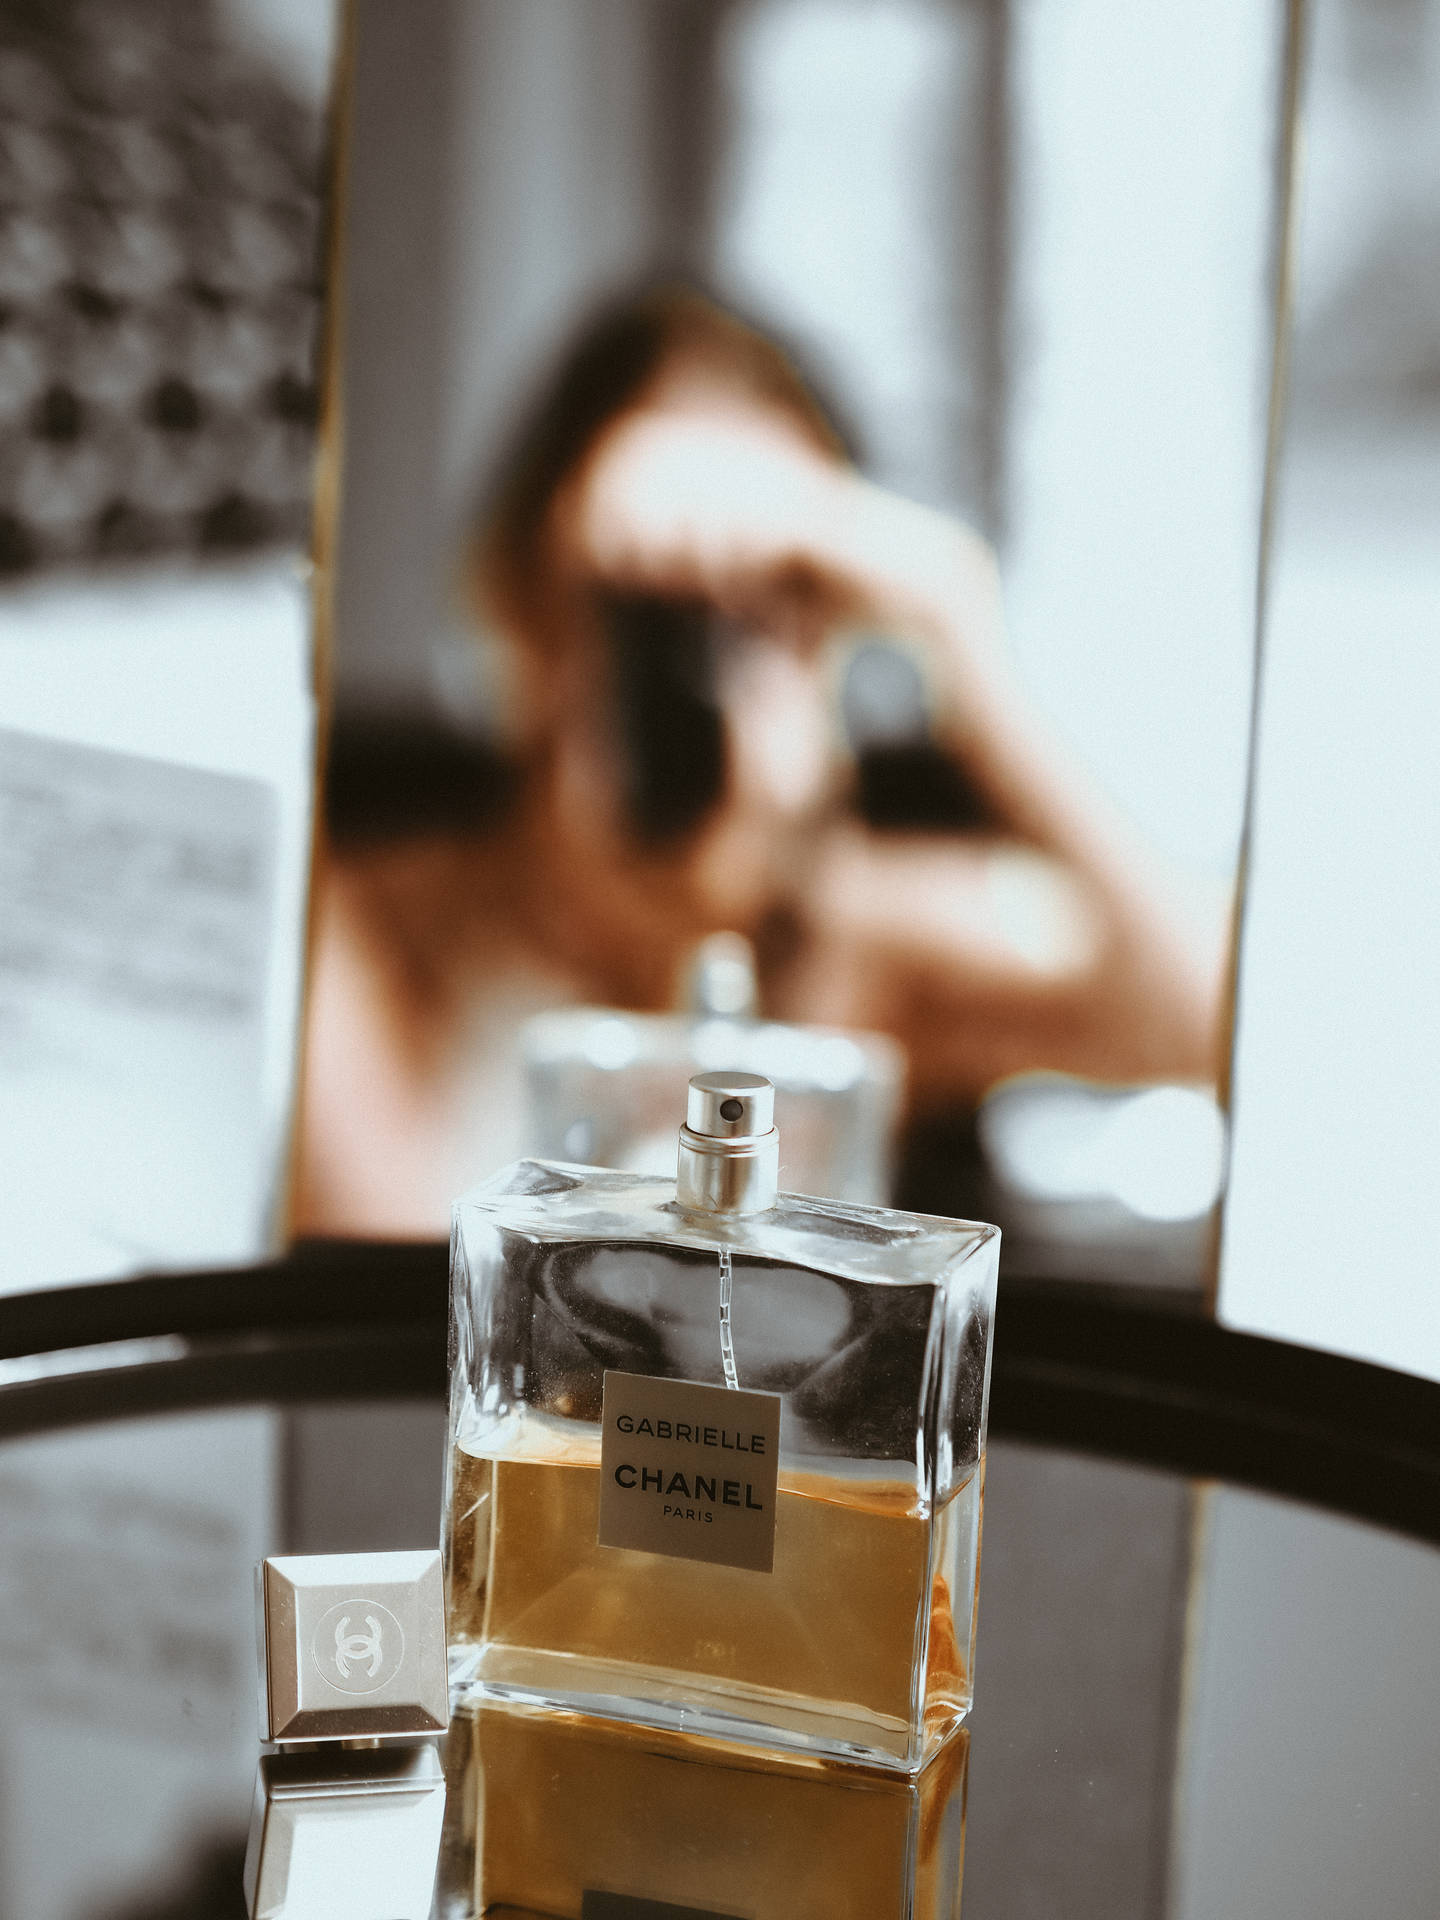 Gabrielle Chanel Perfume Photography Wallpaper